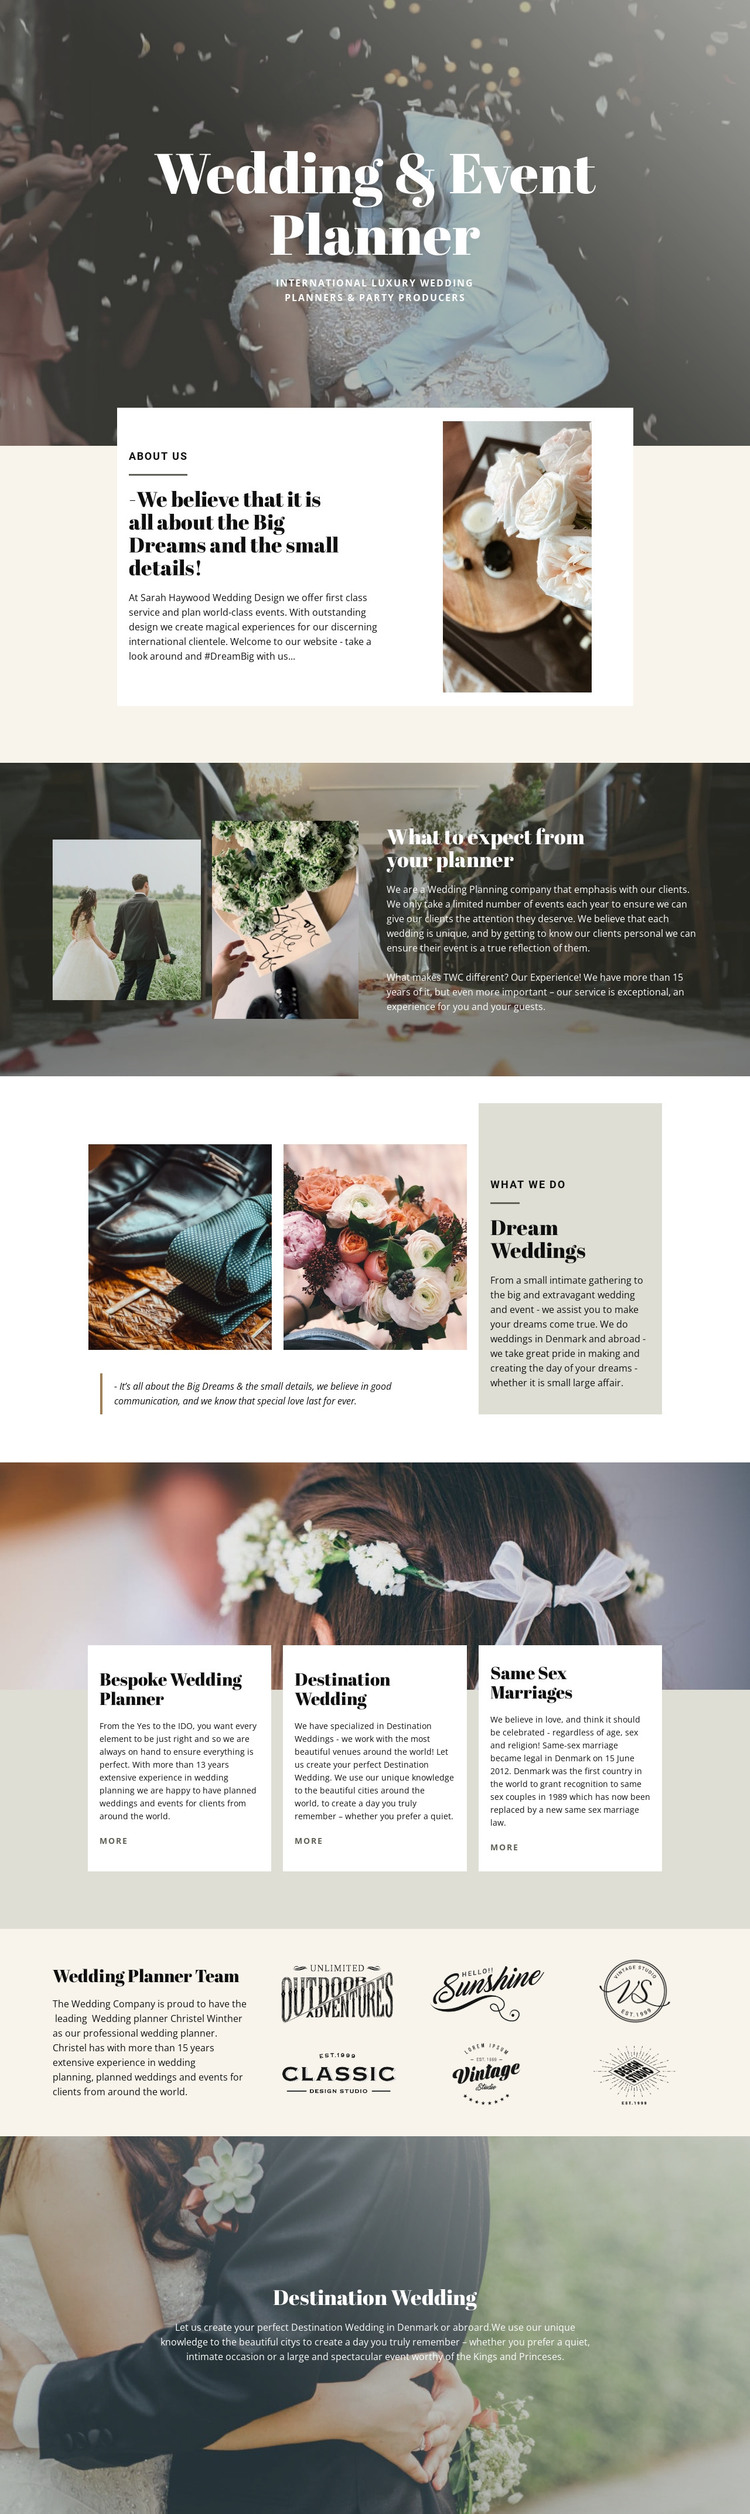 Biggest dream wedding Web Design